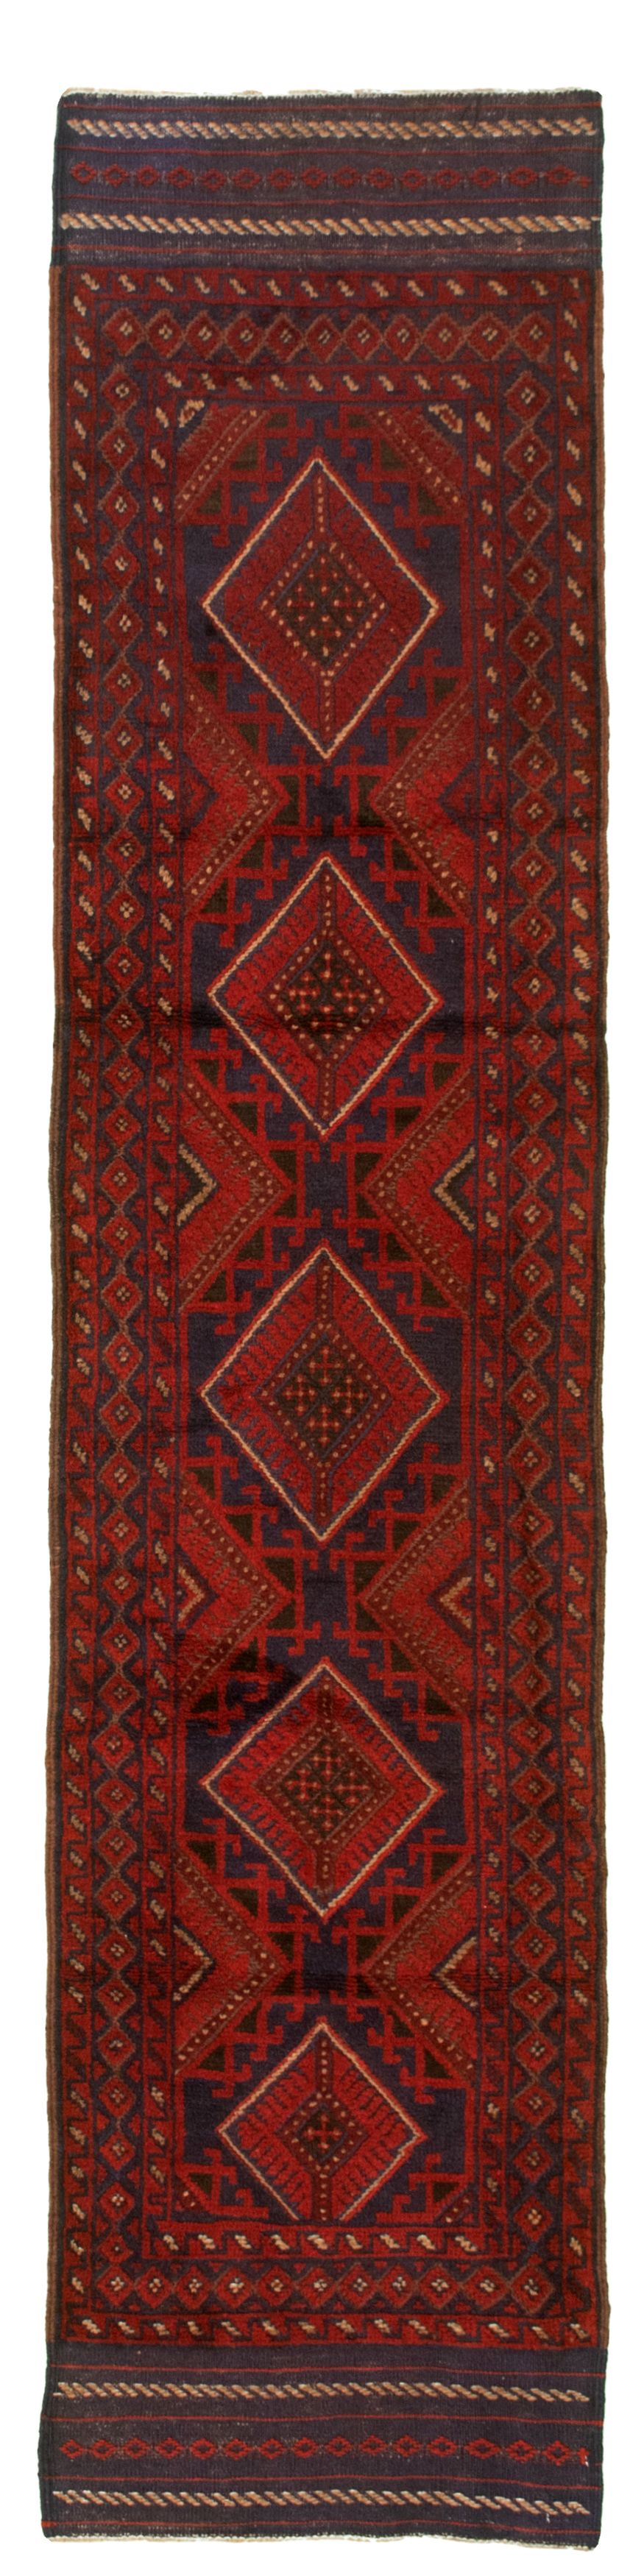 Hand-knotted Tajik Caucasian Red Wool Rug 2'1" x 8'9"  Size: 2'1" x 8'9"  